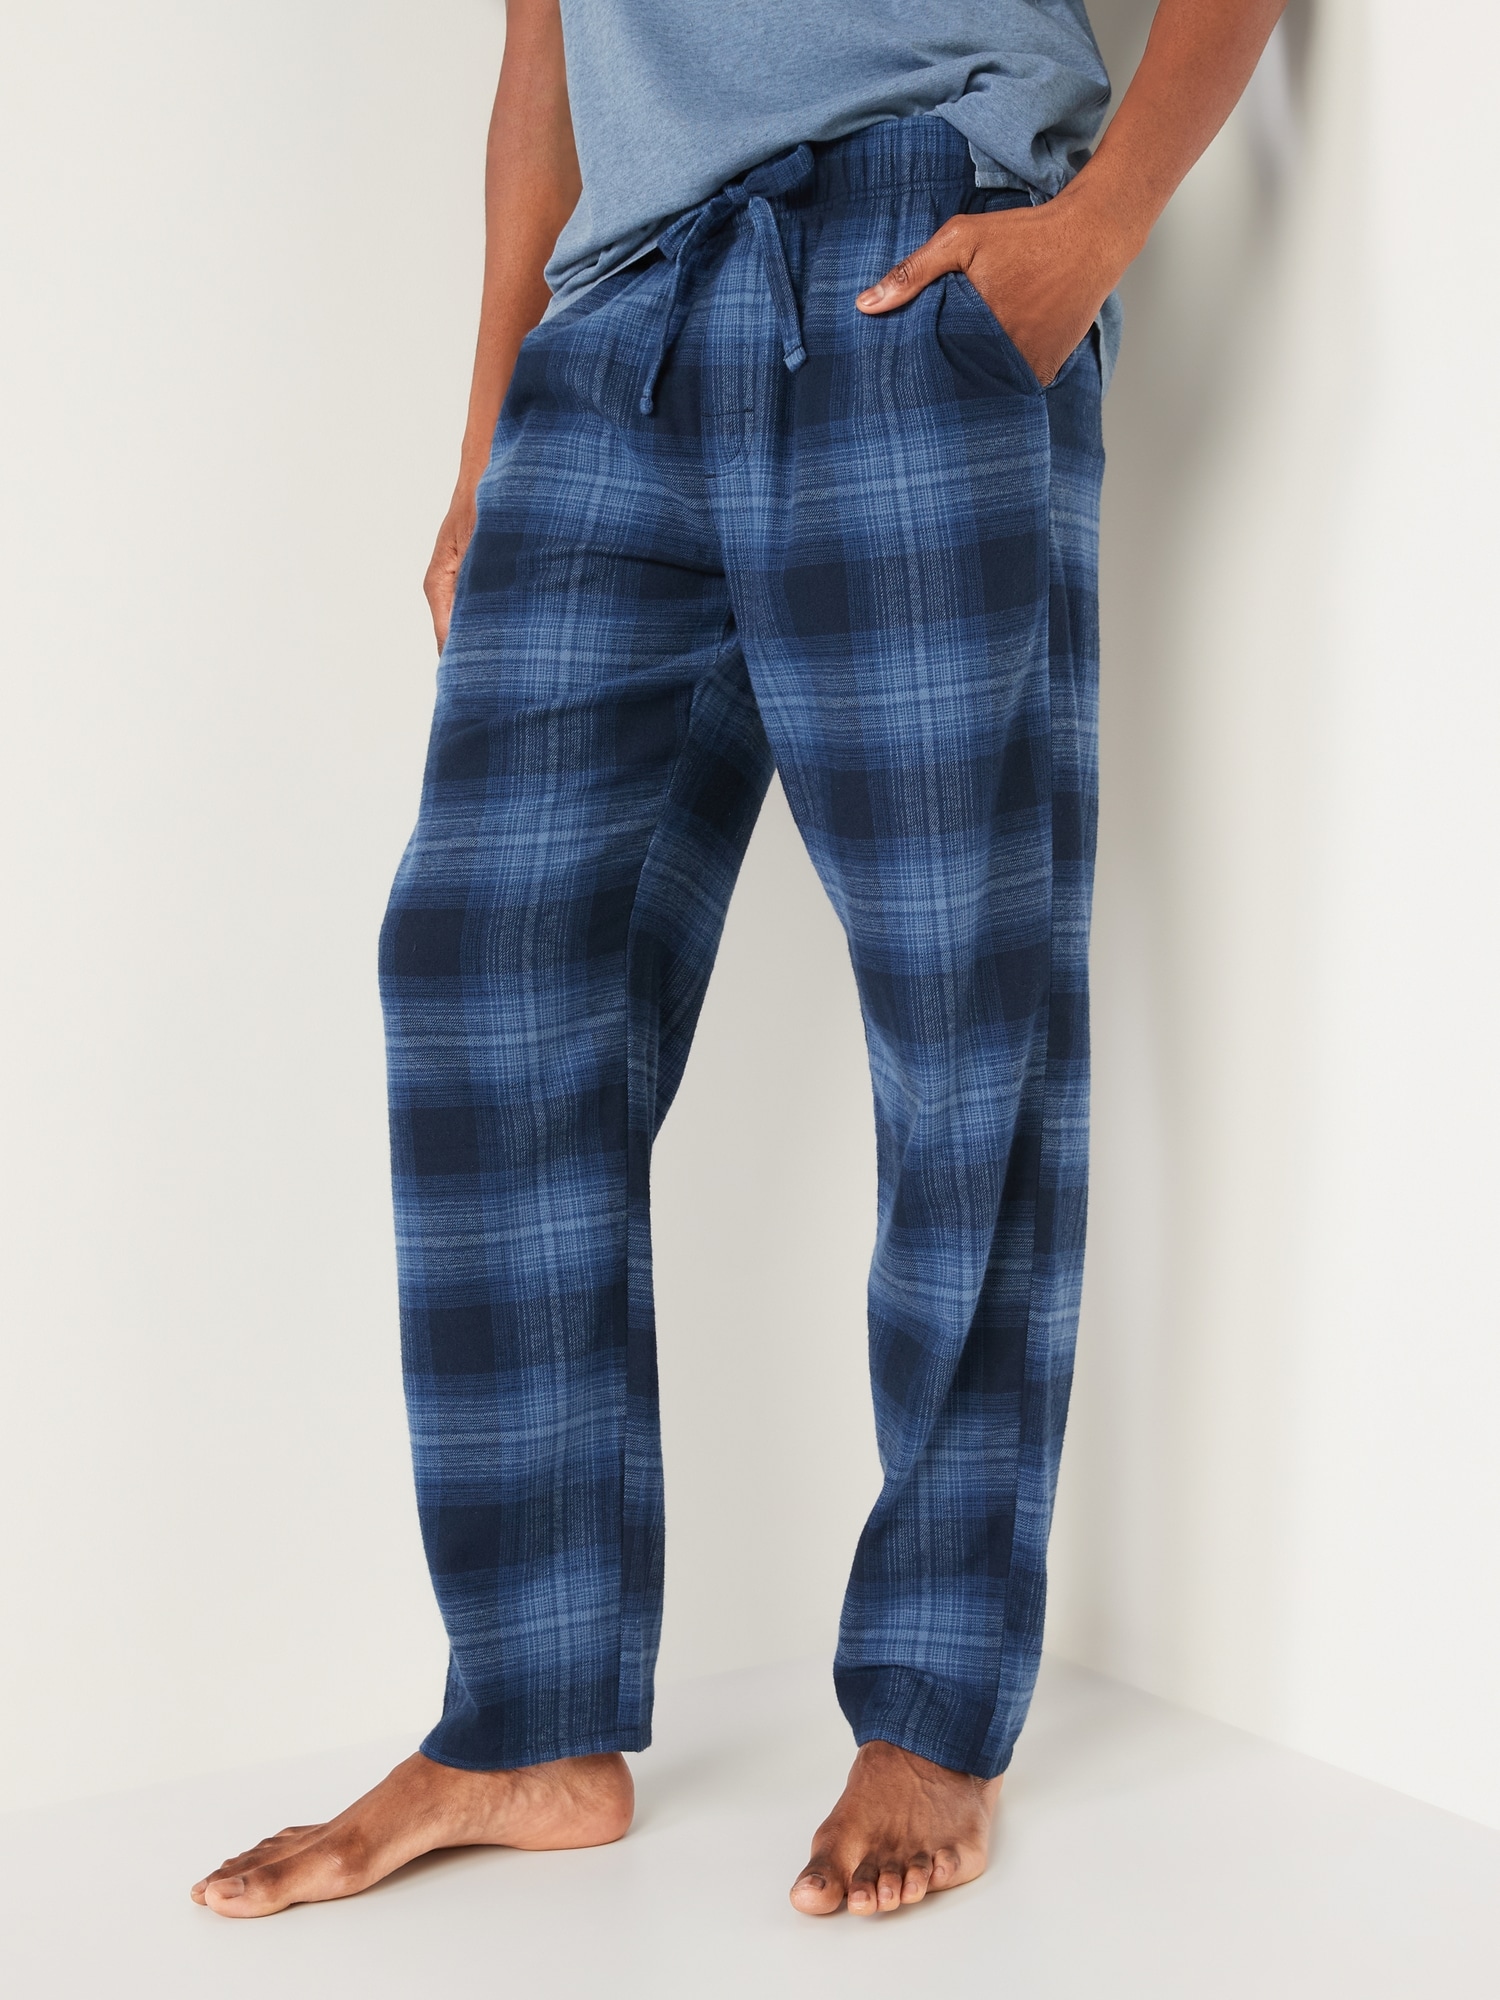 Old Navy Mens Blue Plaid flannel sleep pants w/ pockets Sz Medium NWT 